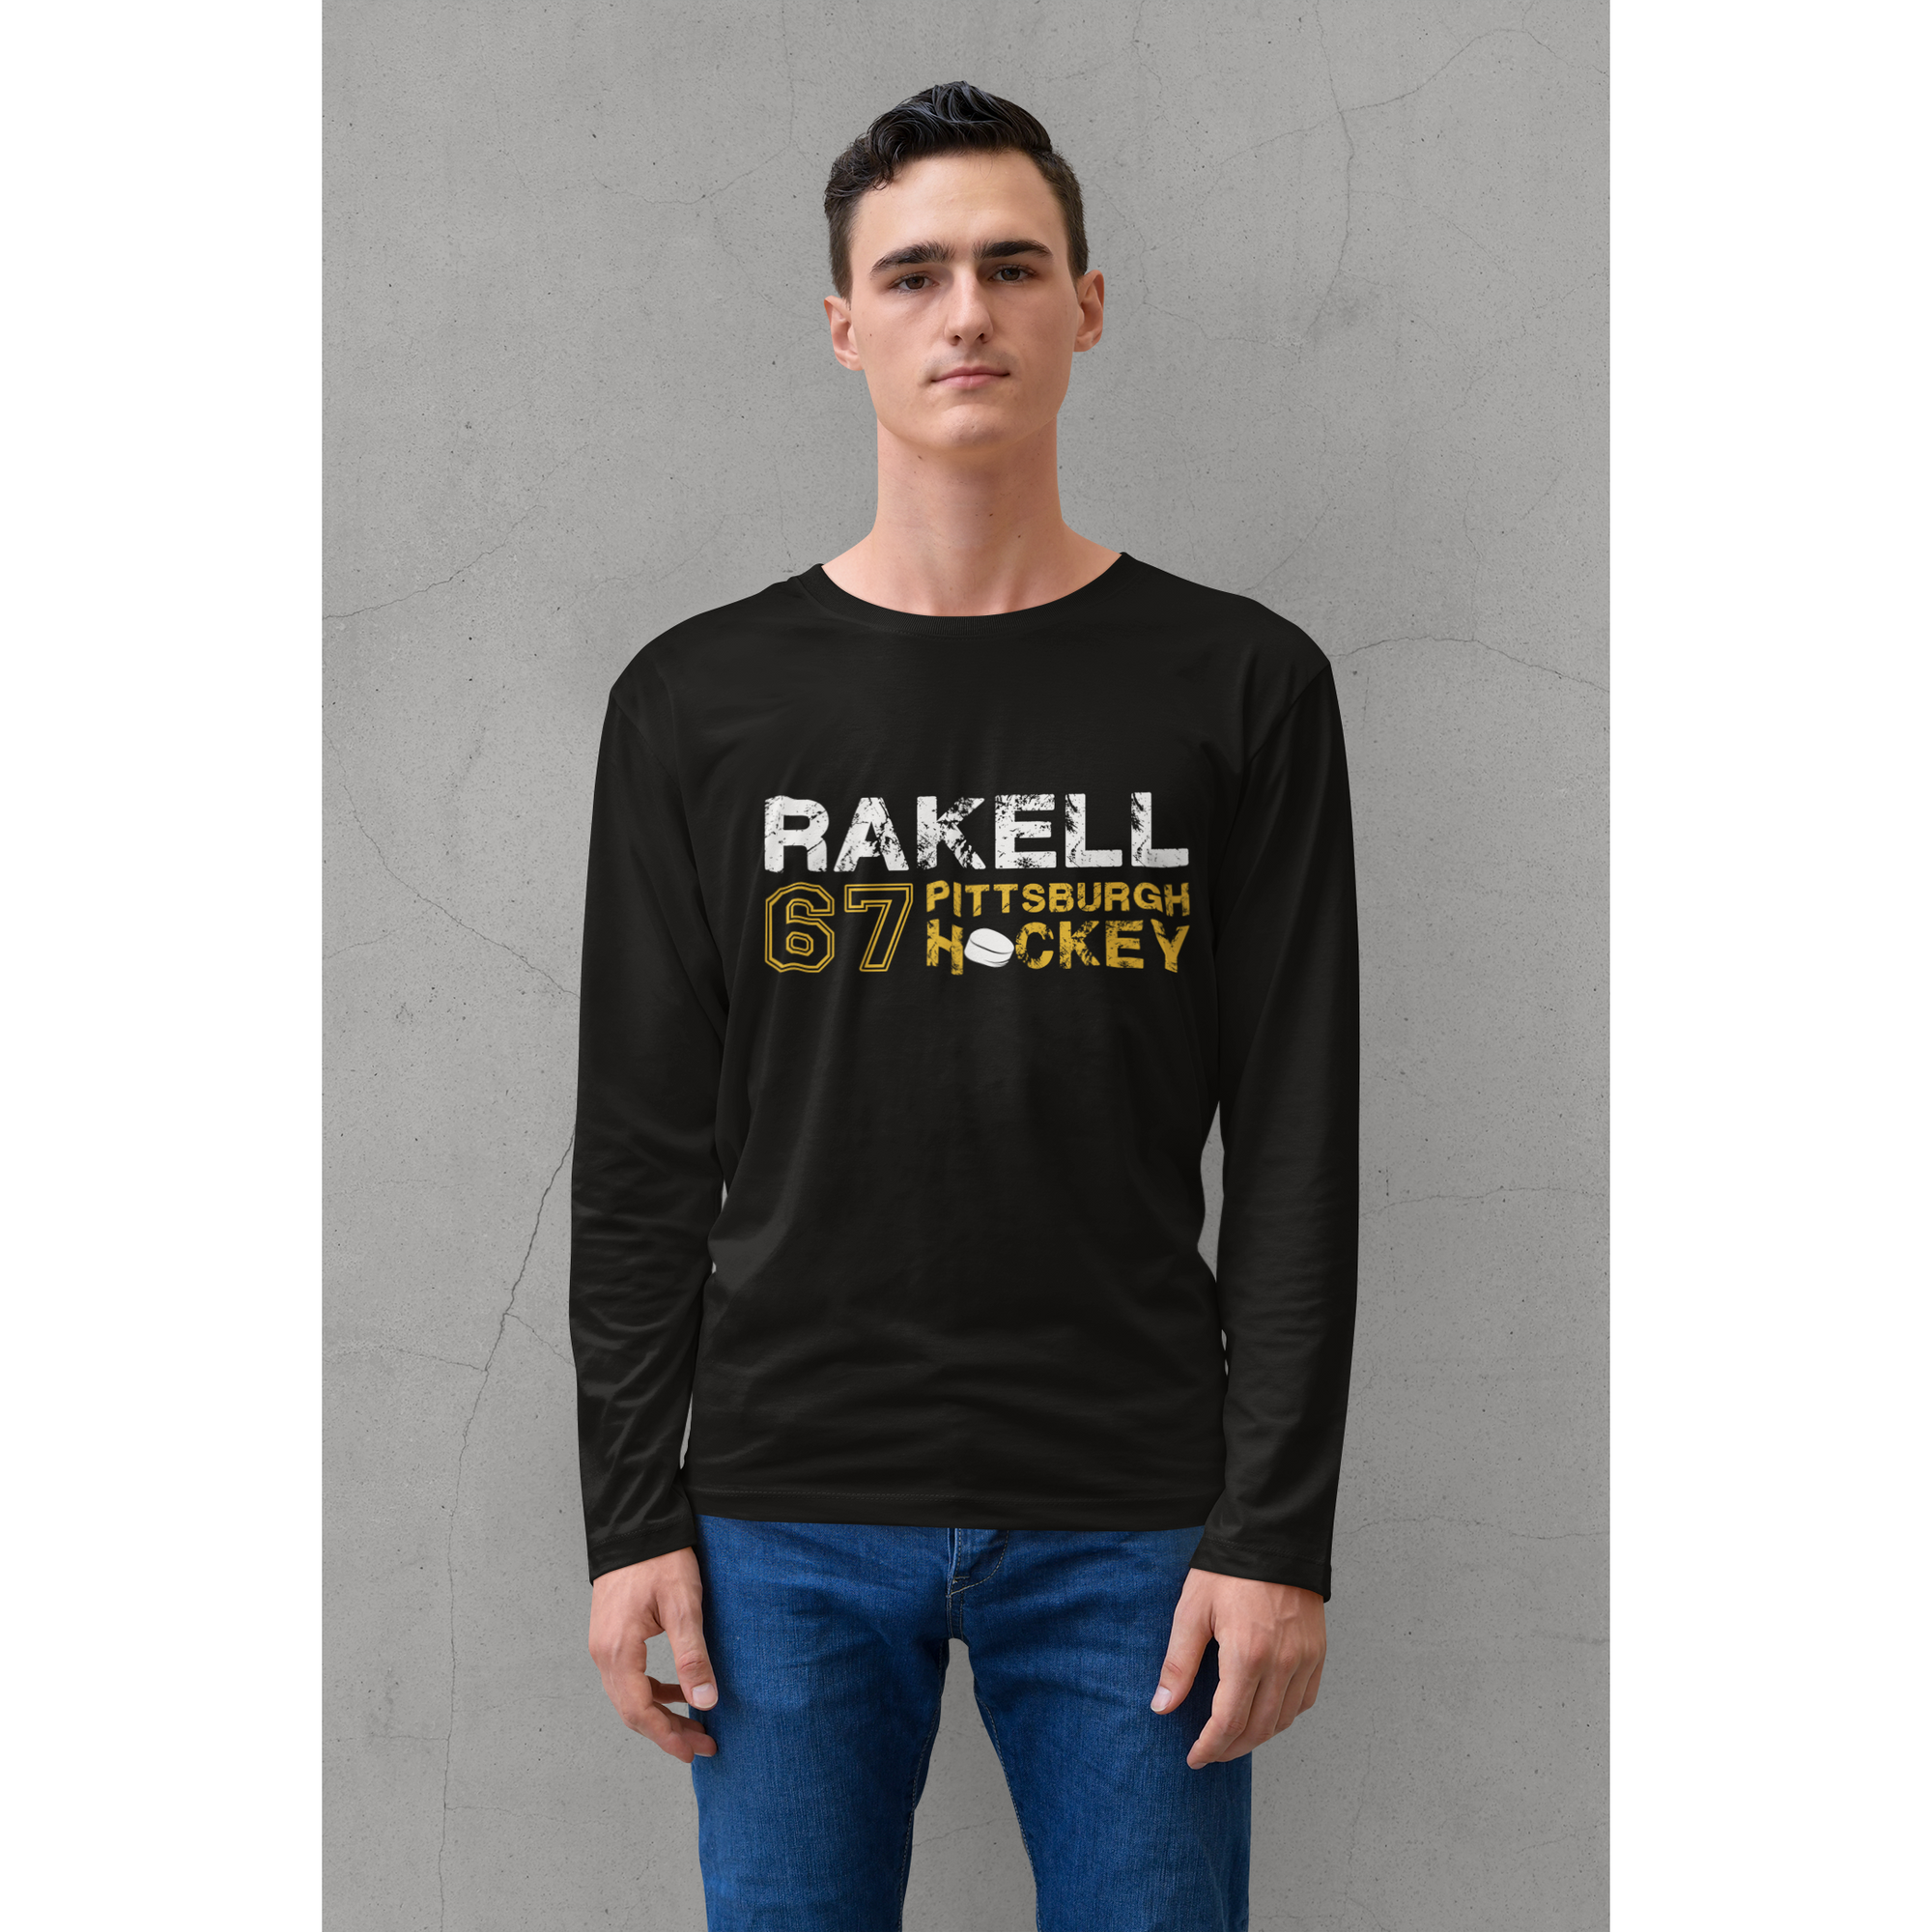 Rakell 67 Pittsburgh Hockey Unisex Jersey Long Sleeve Shirt